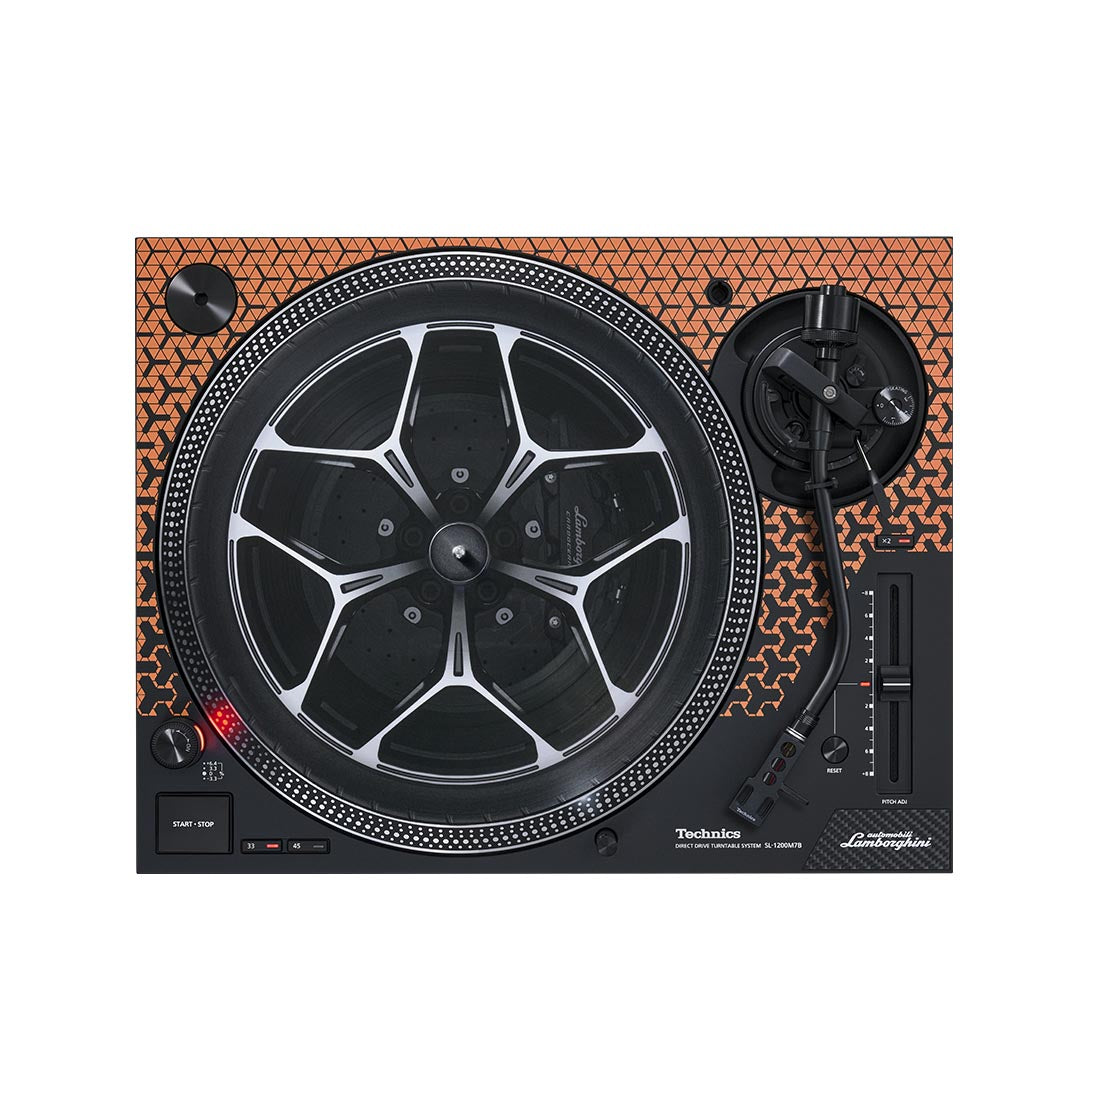 Technics SL-1200M7BD Orange Lamborghini Collaboration Turntable with engine sounds picture vinyl